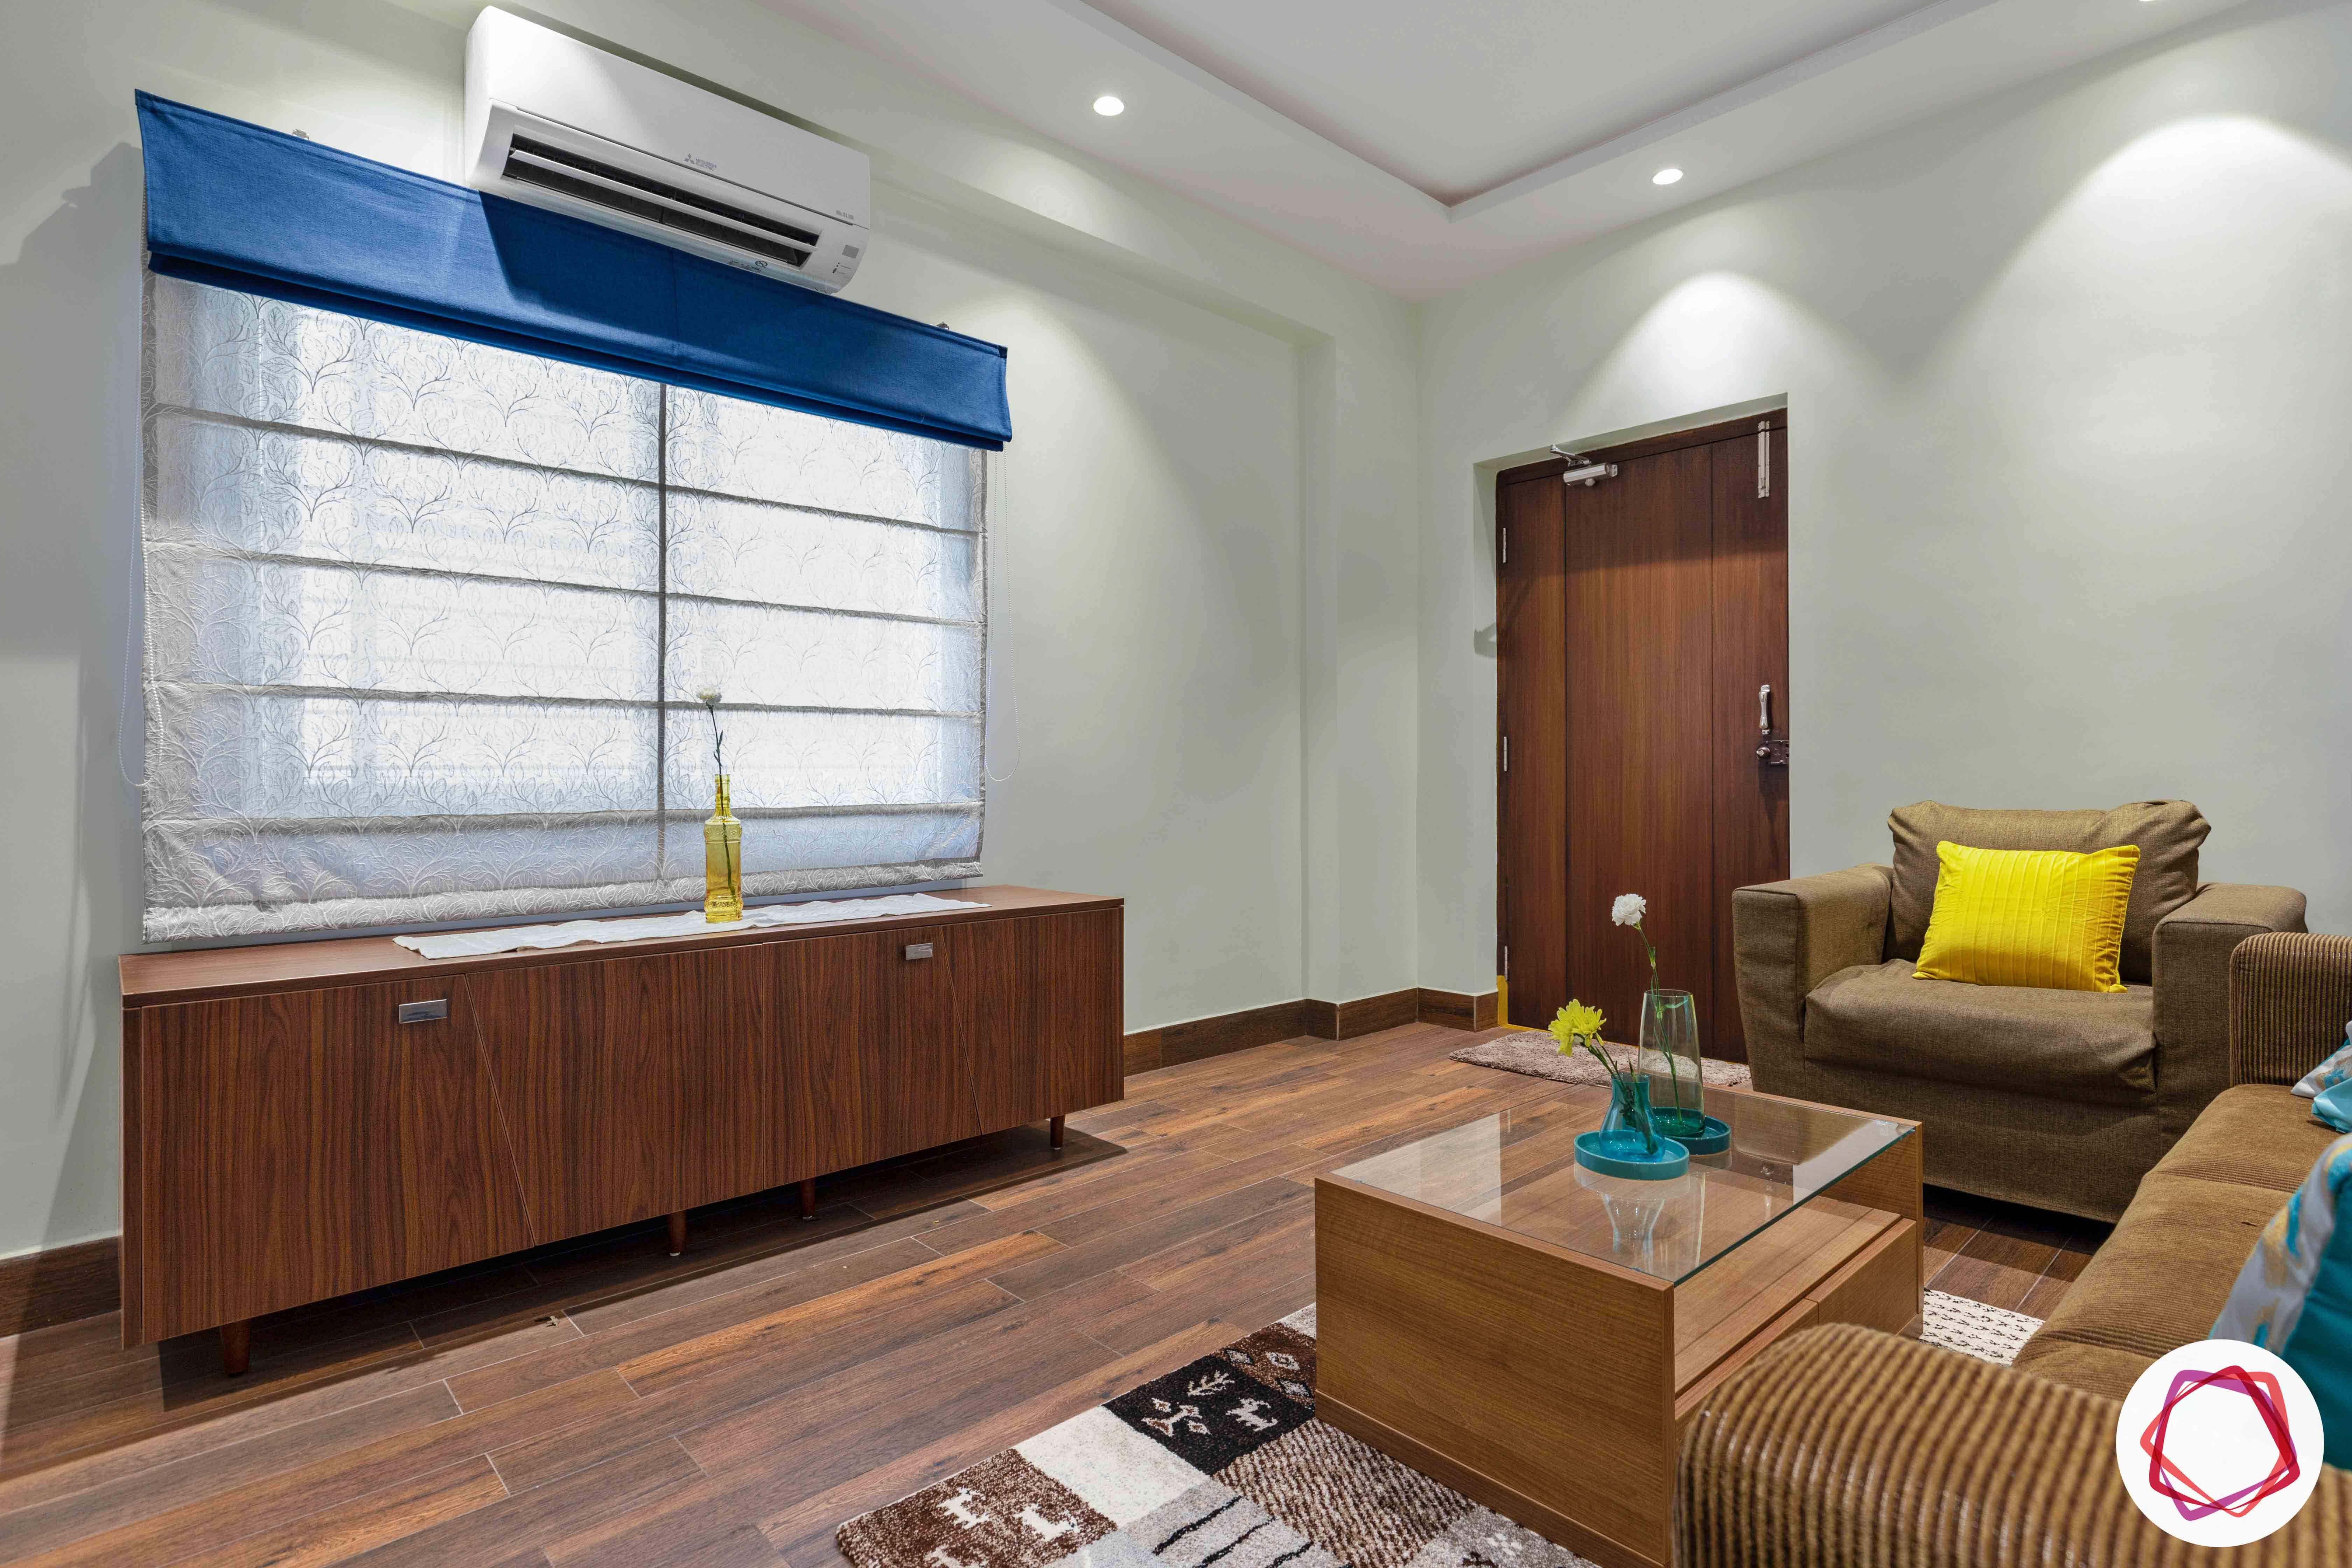 sofa designs-cabinet designs for living room-wooden flooring designs
